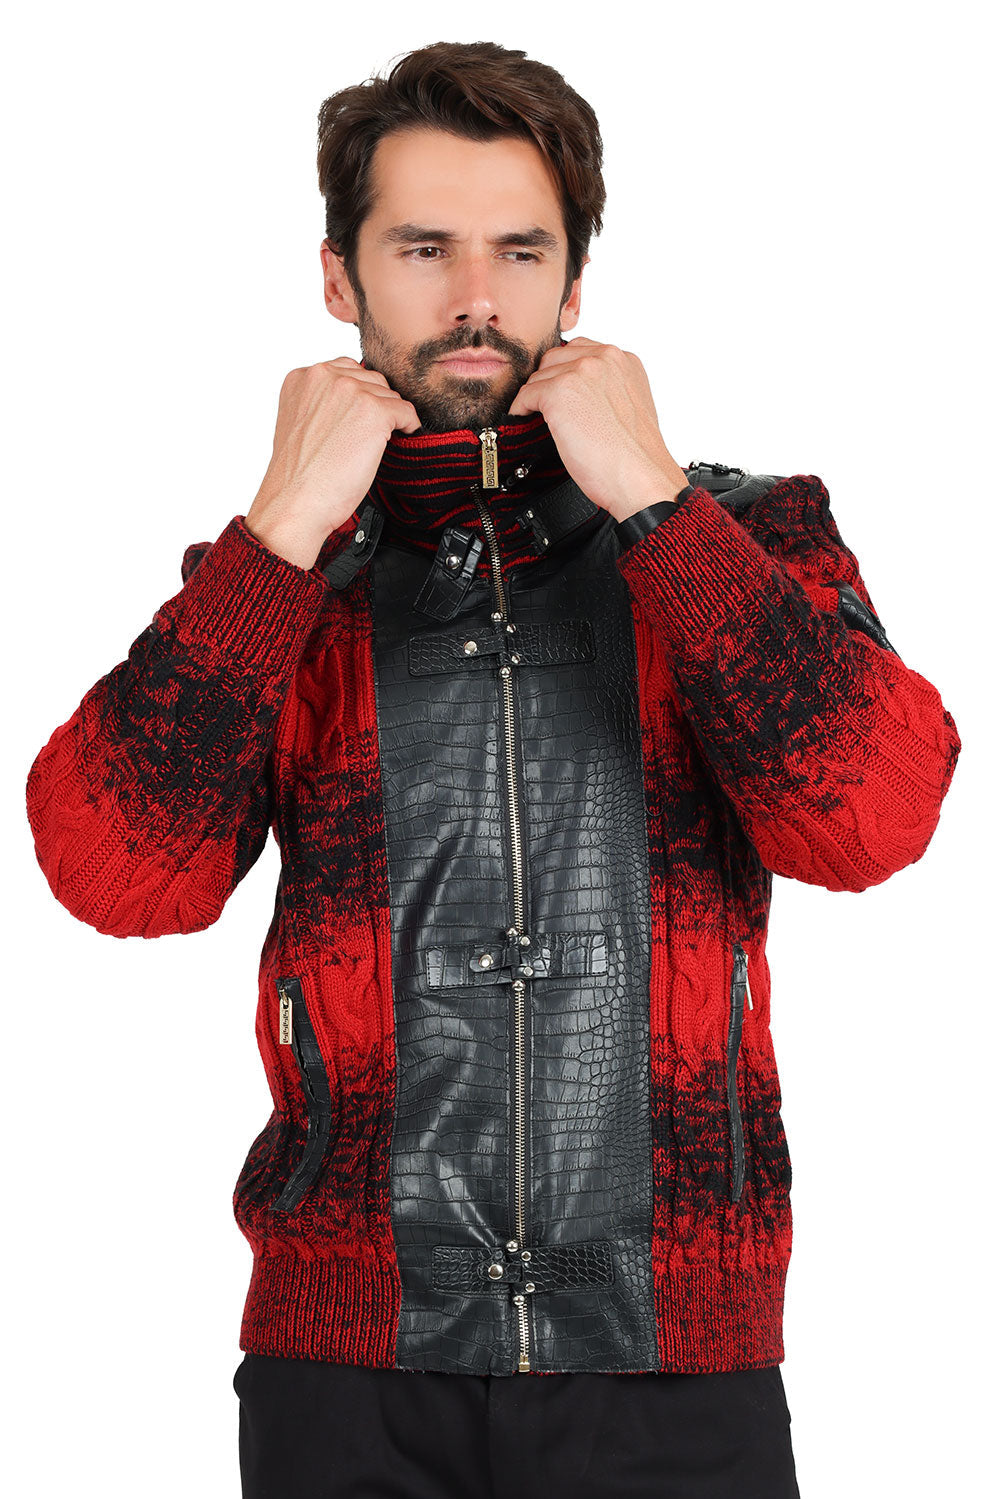 Barabas Men's Zipper Stand collar Animal Print Winter Jacket 2SWZ1 Red